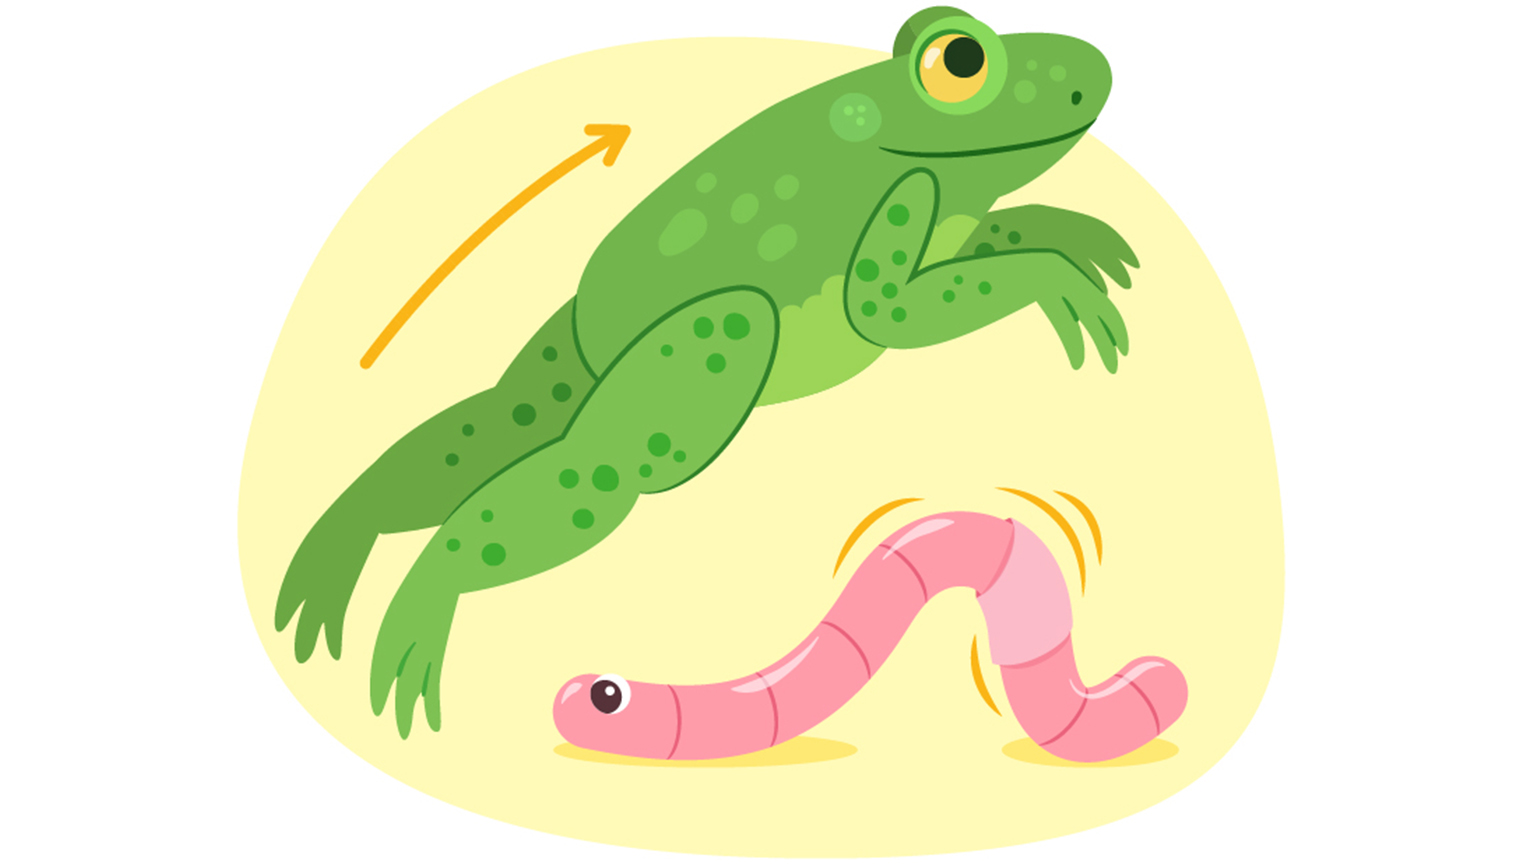 tvo illustration frog and worm